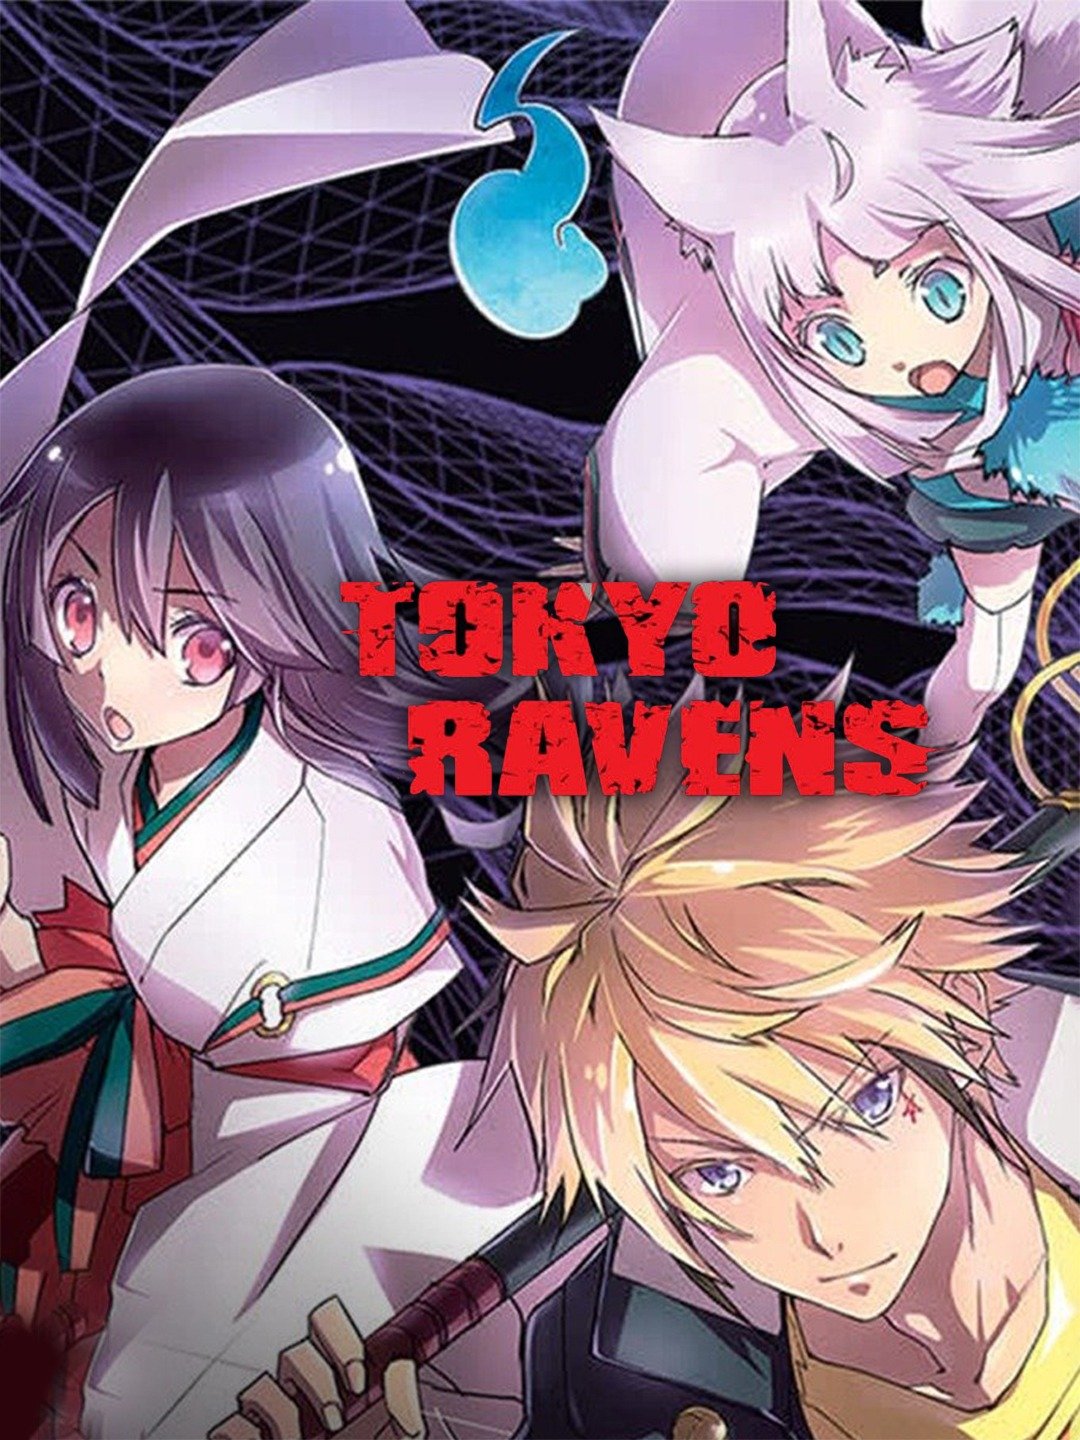 Tokyo Ravens: Another x Holiday Manga